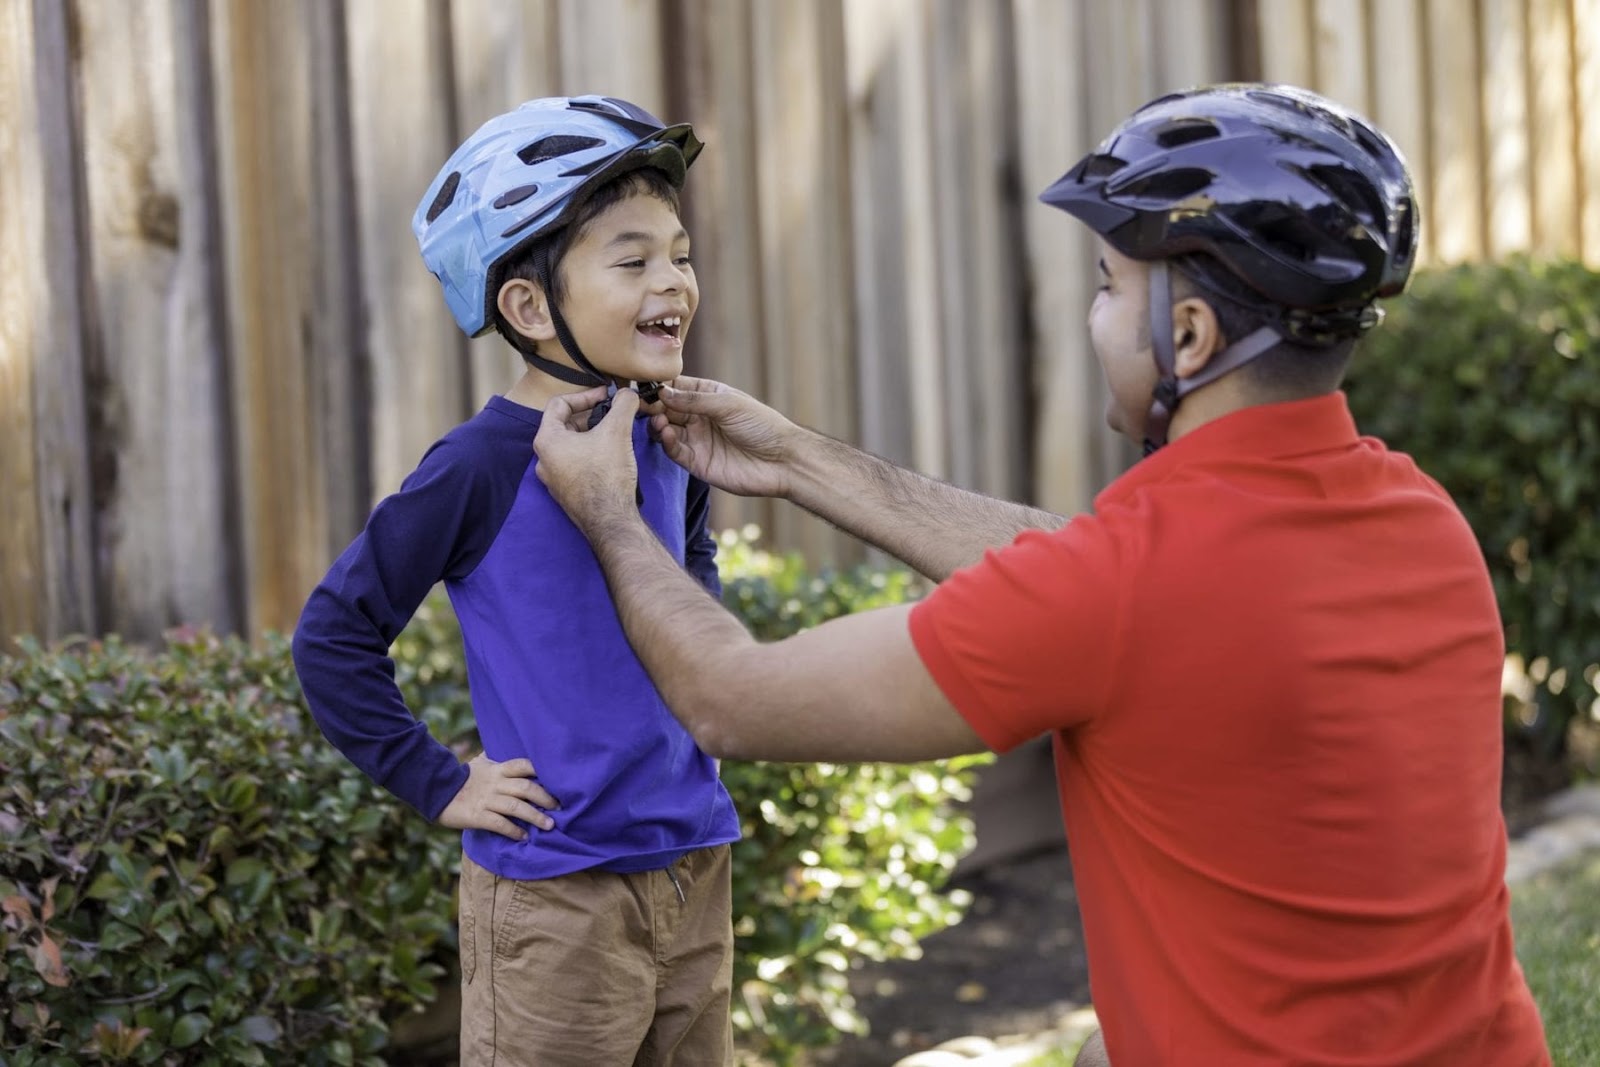 Can you wear a bike helmet for roller skating?